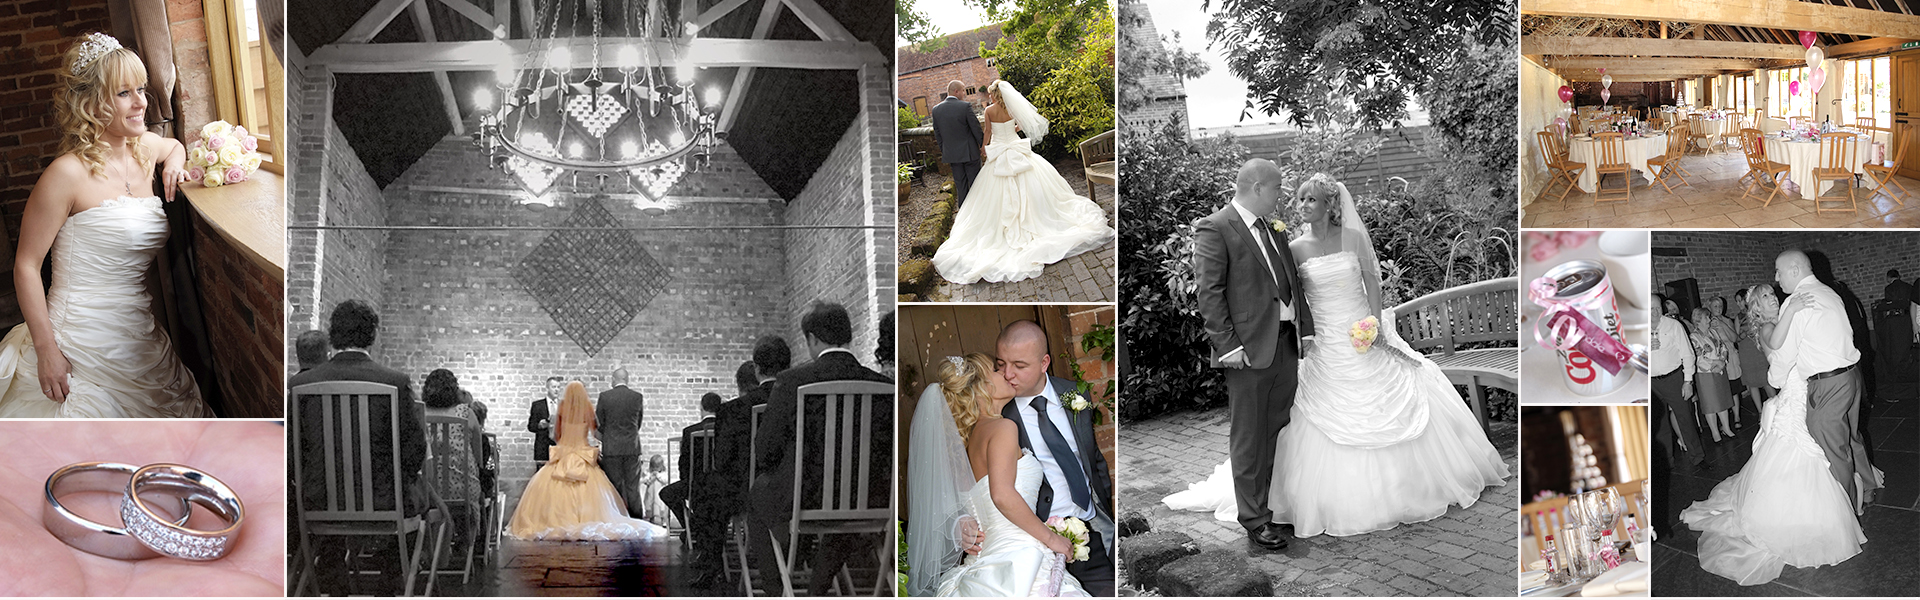 Curradine Barns, Shrawley, Female wedding photographer, Traditional Wedding Photography